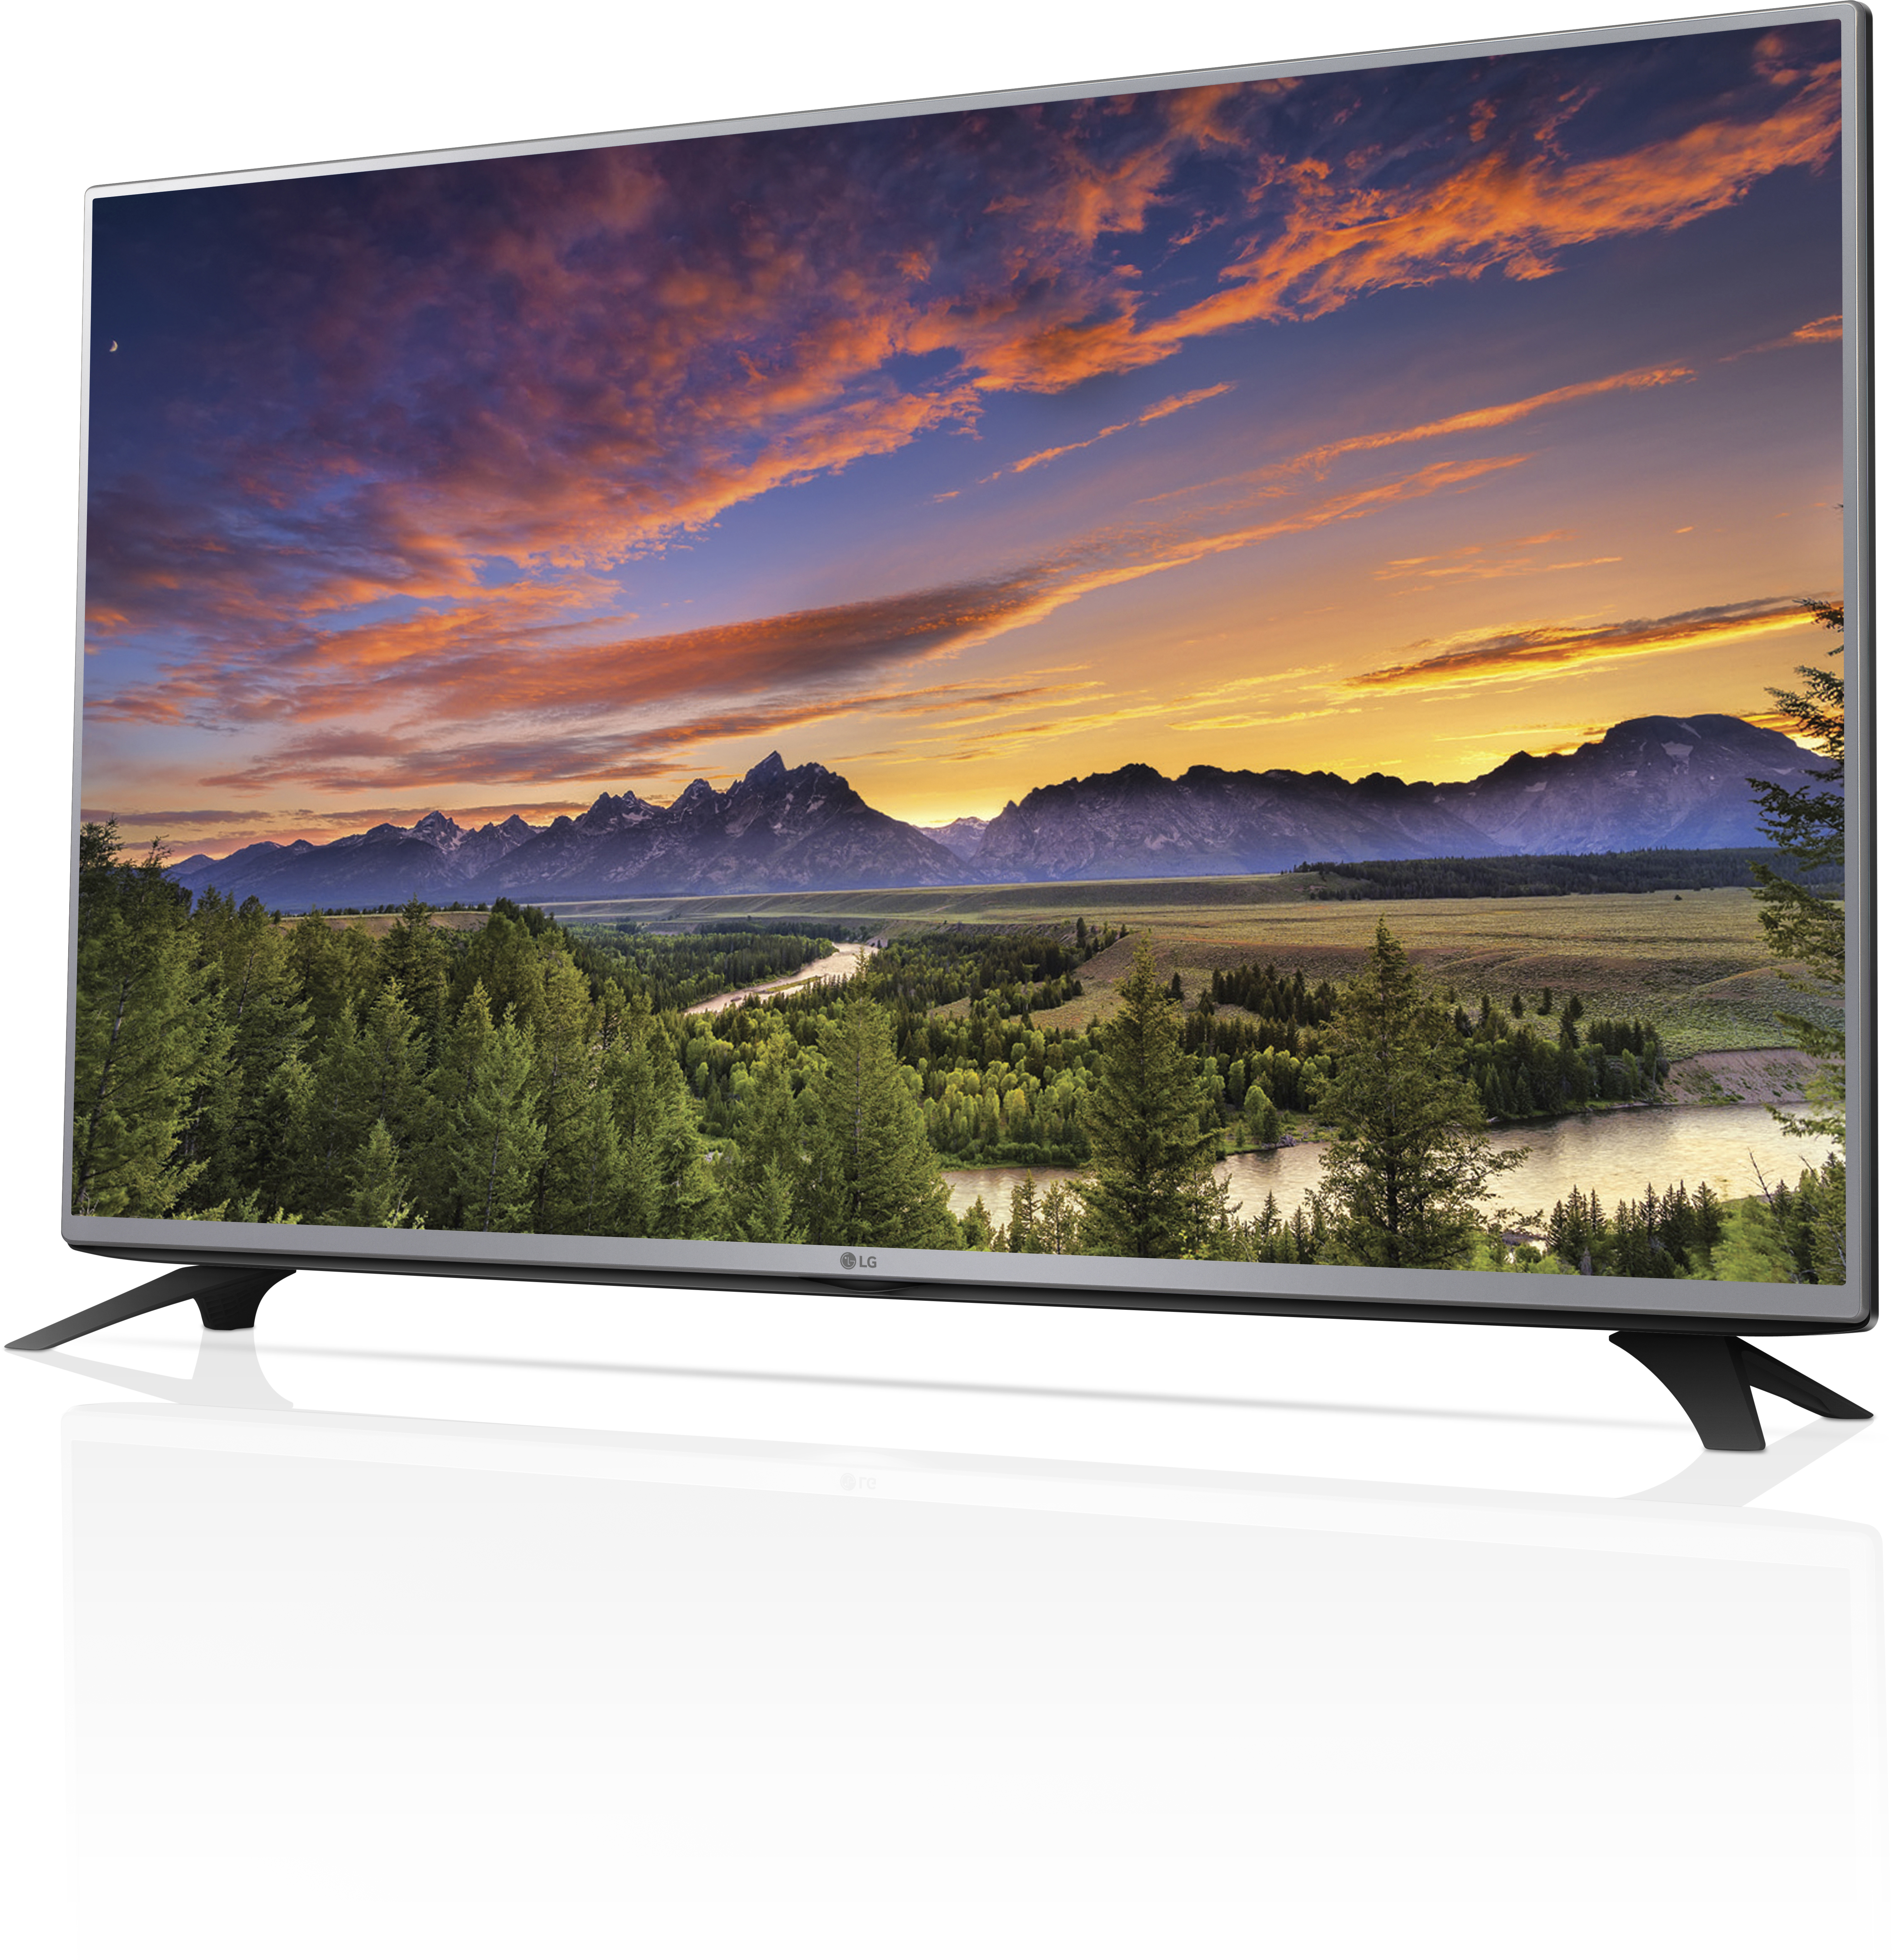 В каких магазинах можно купить телевизор. LG 32lf551c. LG 32lf562u. LG 32lf510u. LG 32lf560u.